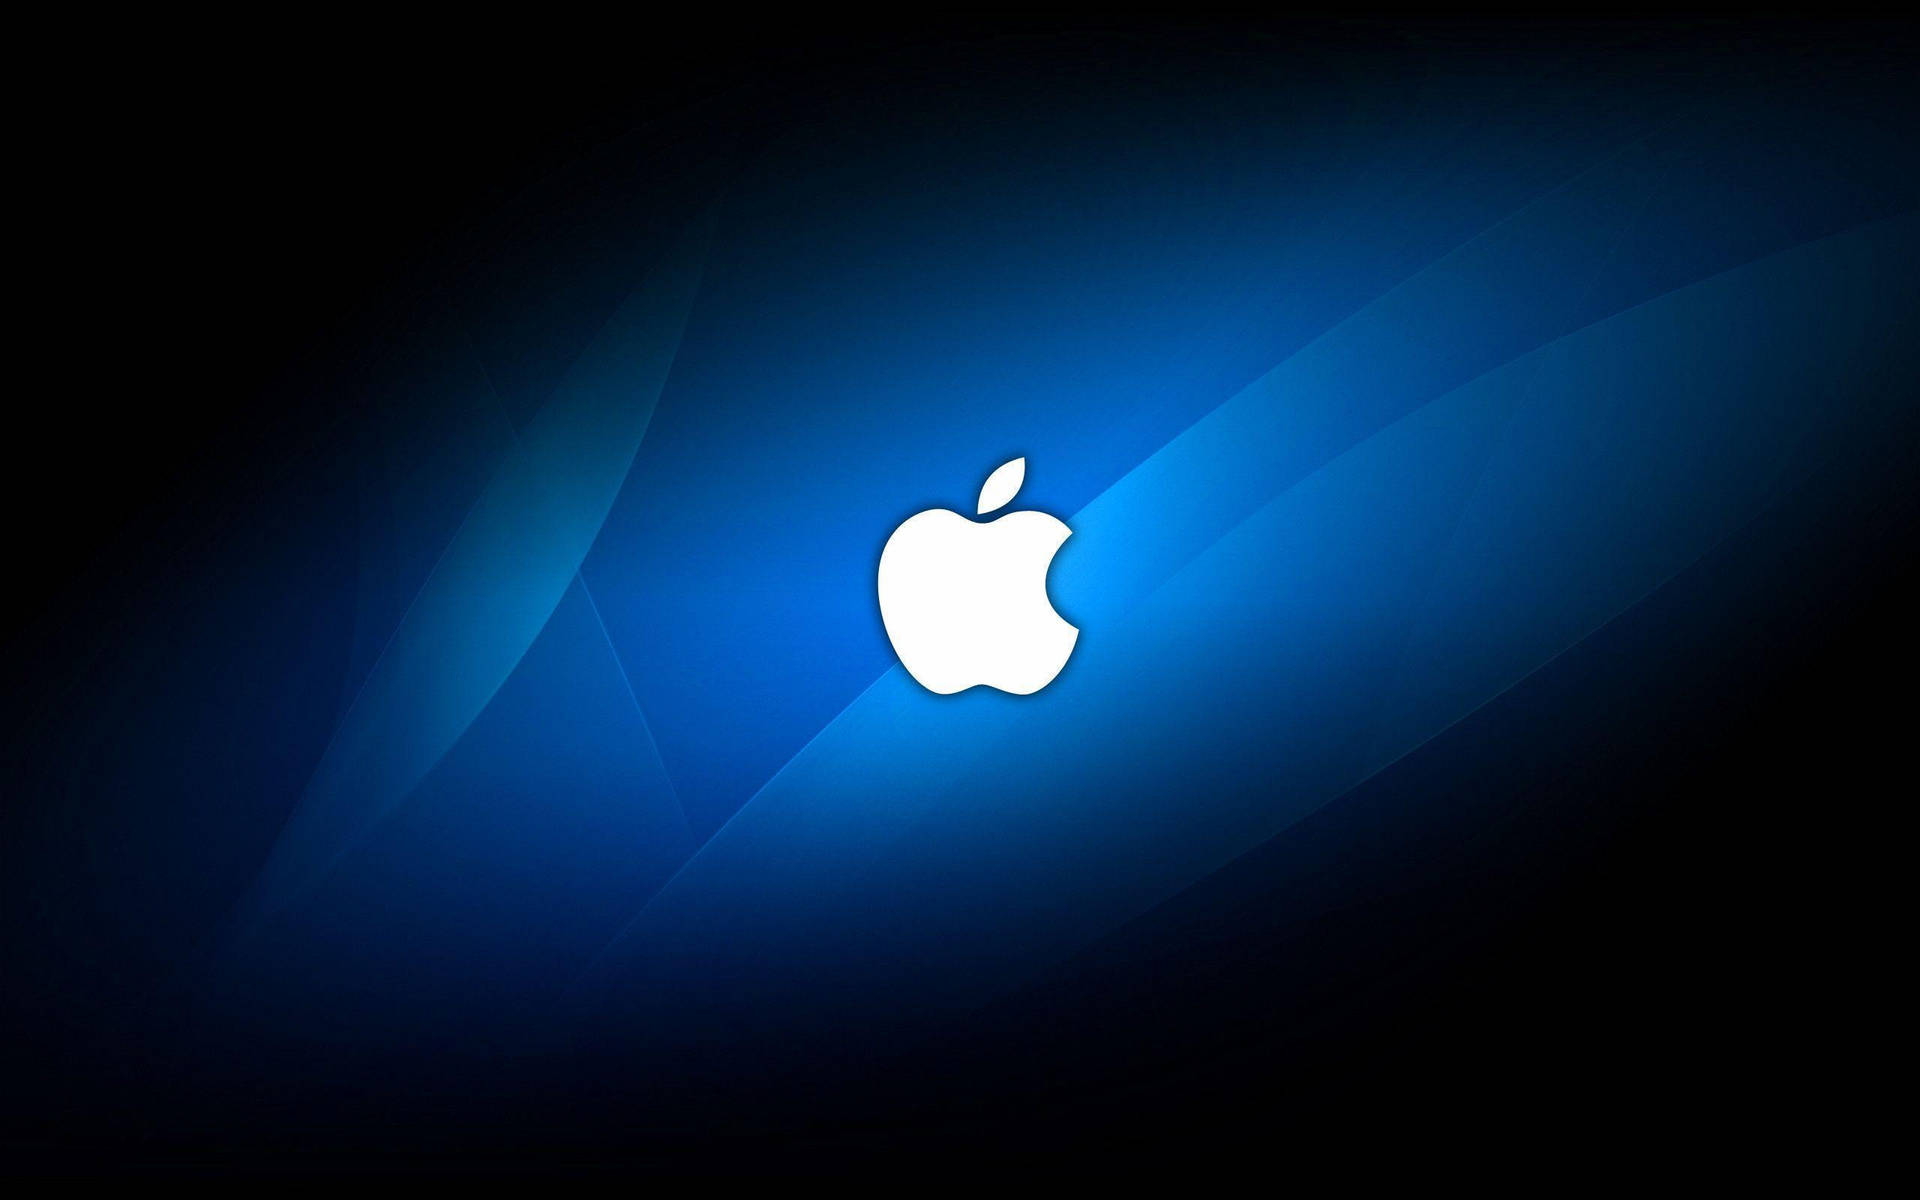 Apple Logo On Black And Blue Wallpaper